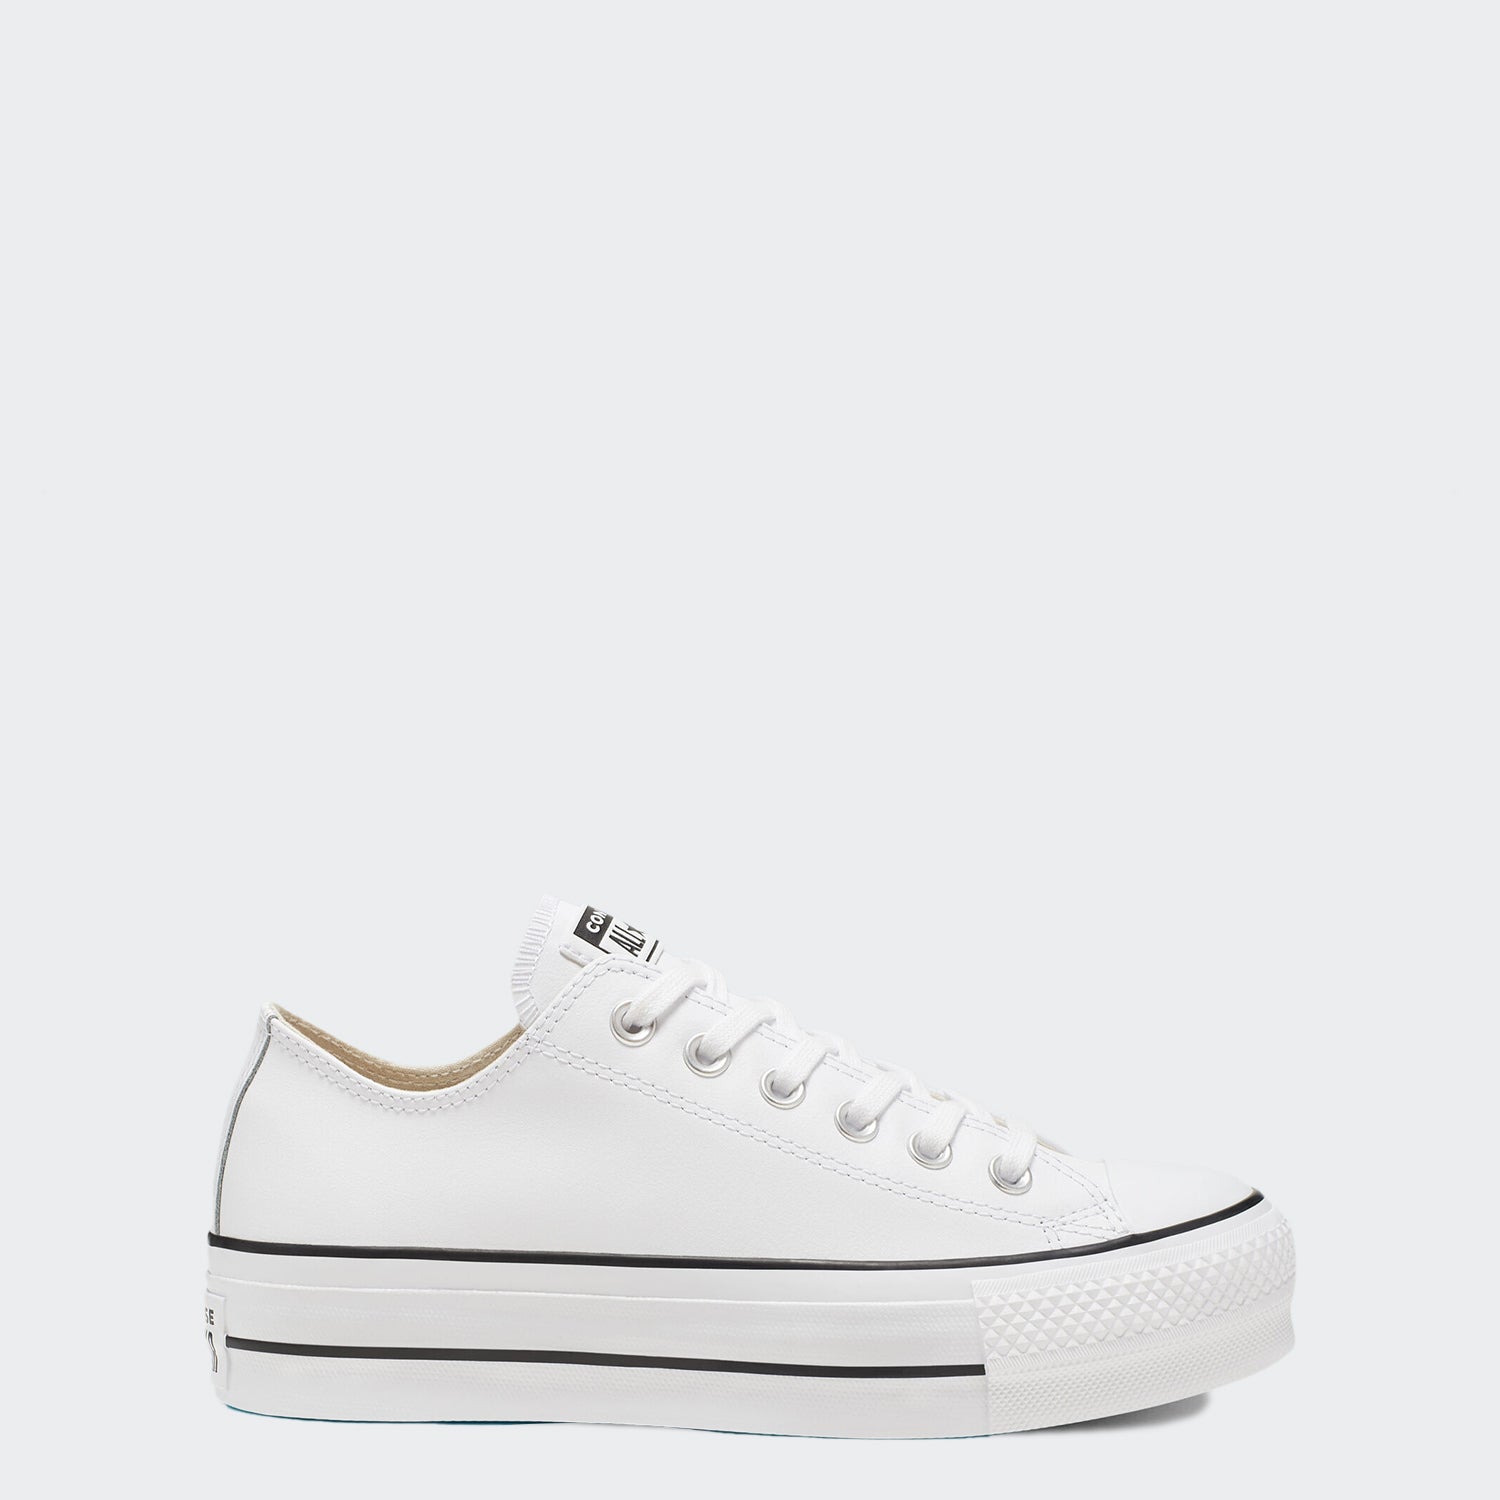 Converse Women's Chuck Taylor All Star Platform Sneakers - White Black - Size 7